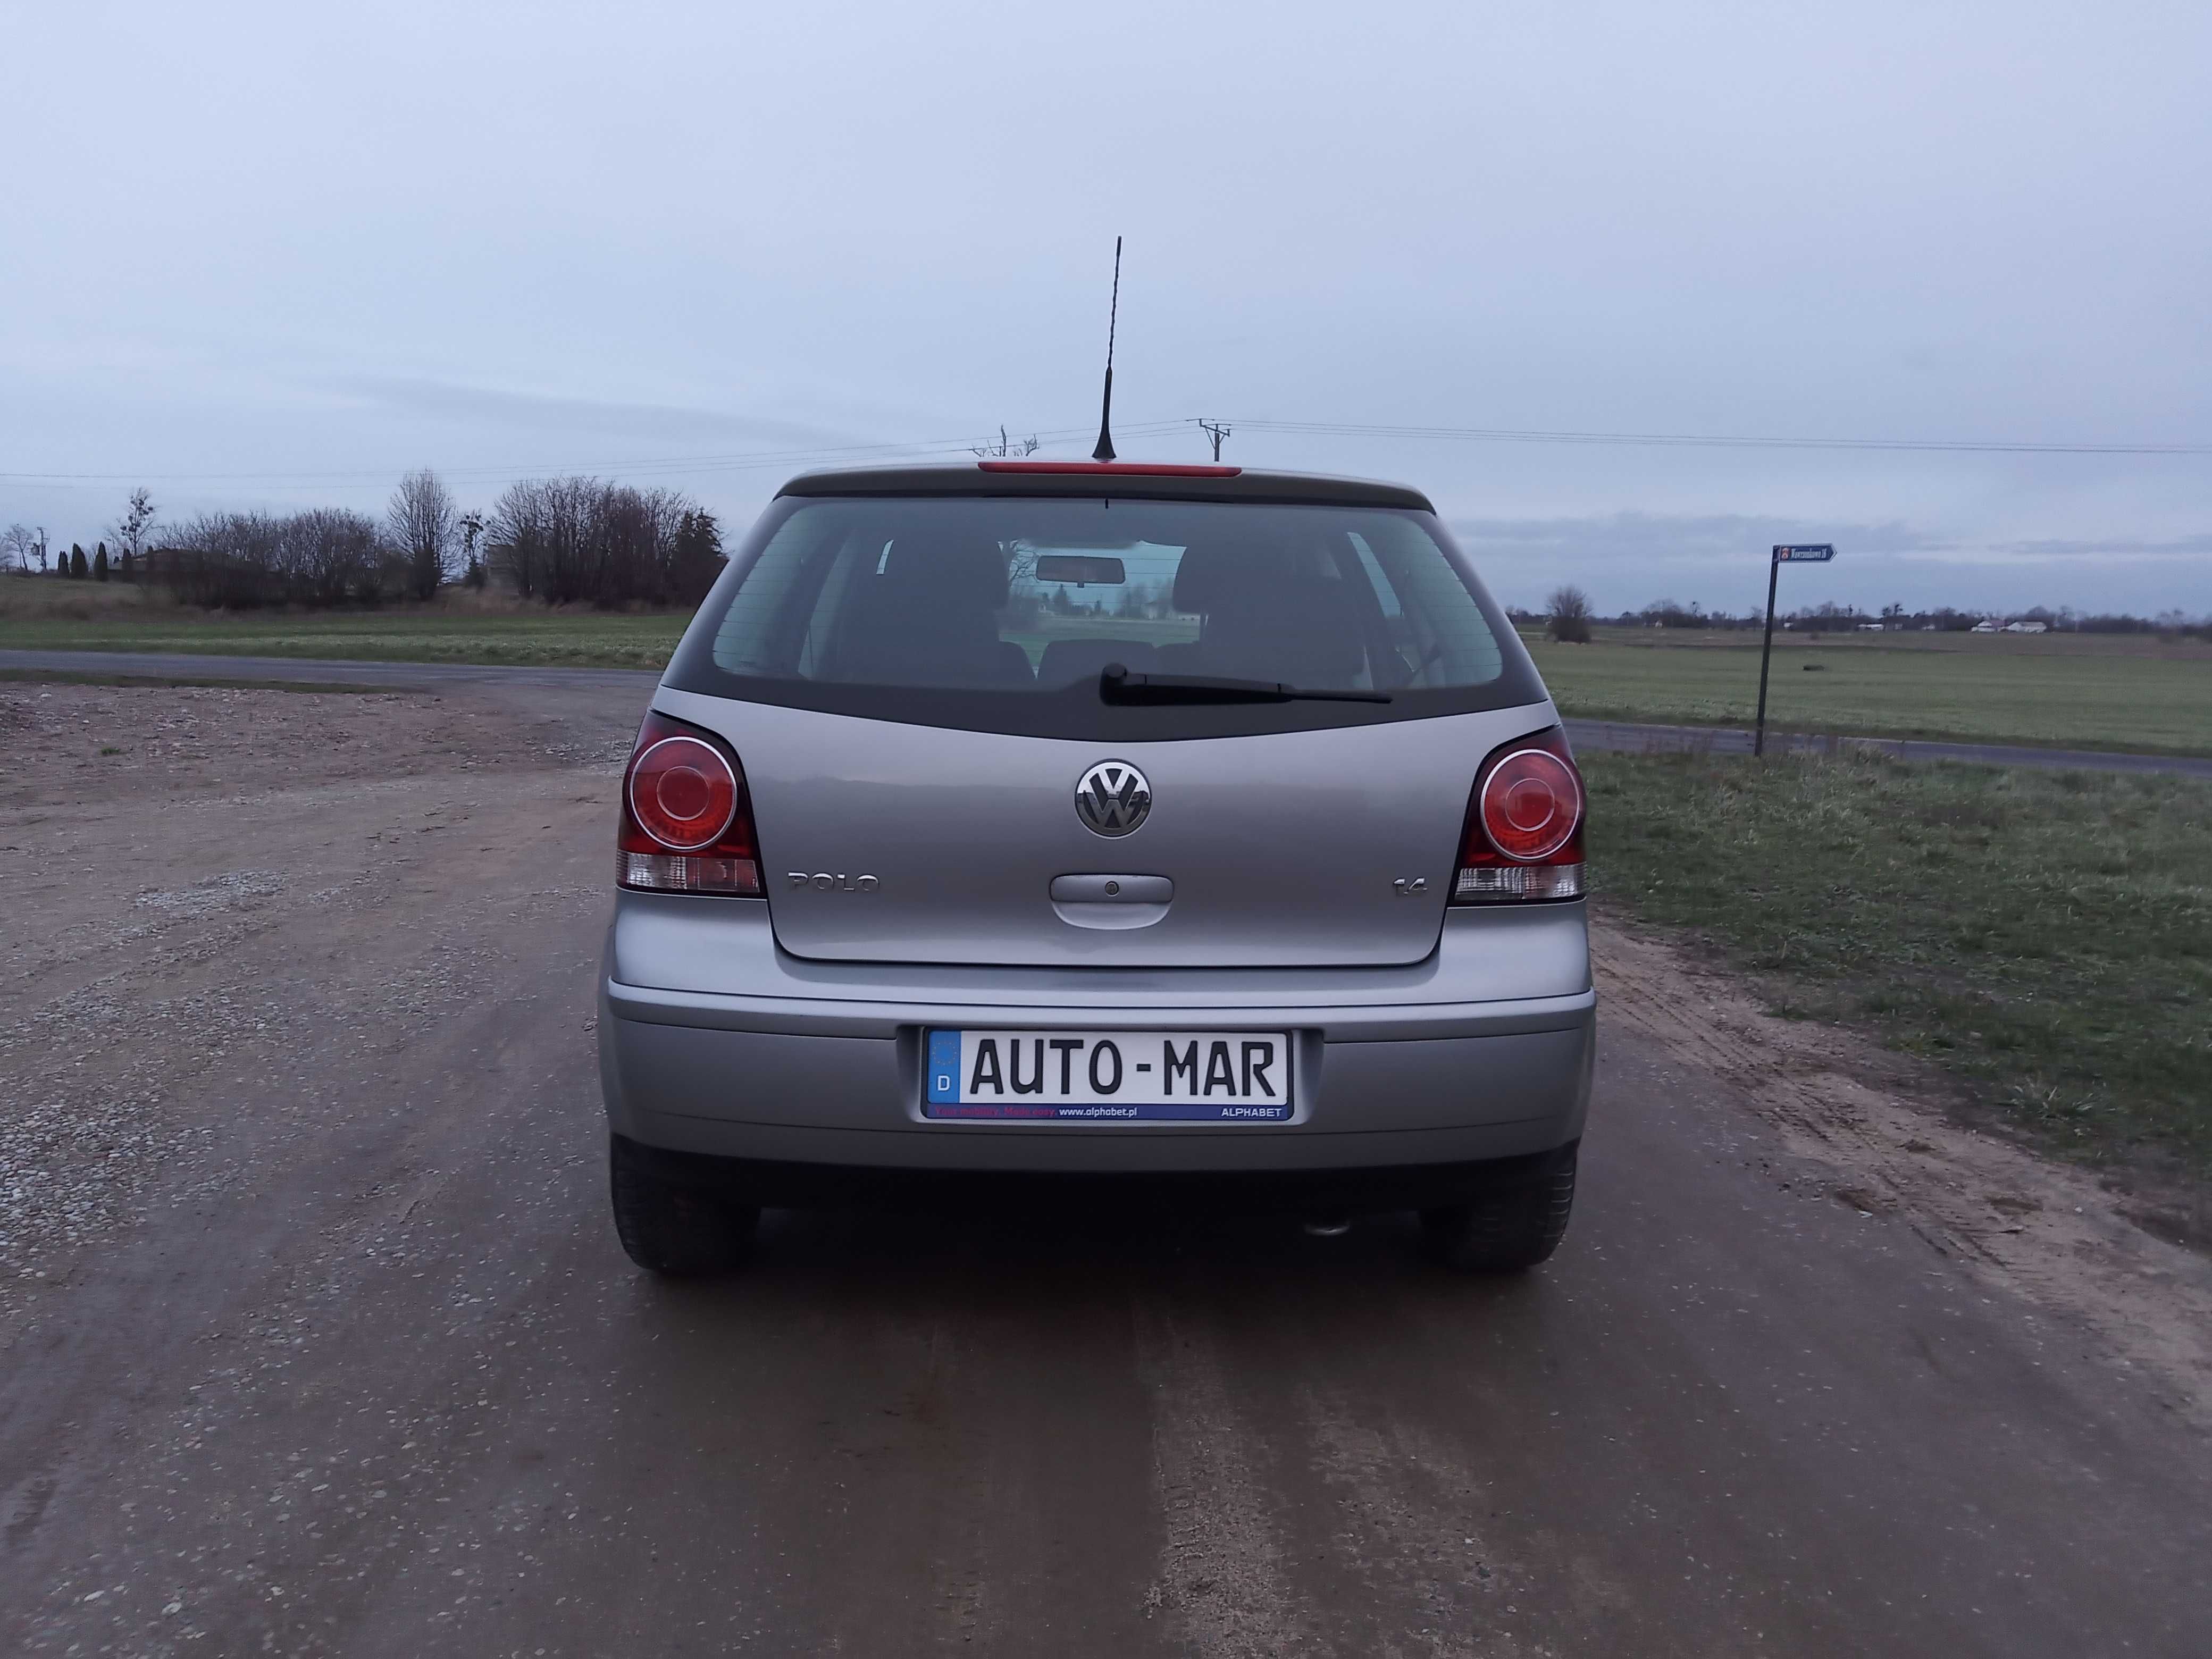 VW POLO LIFT 1.4 MPi 2007 rok Sprowadzony opłacony